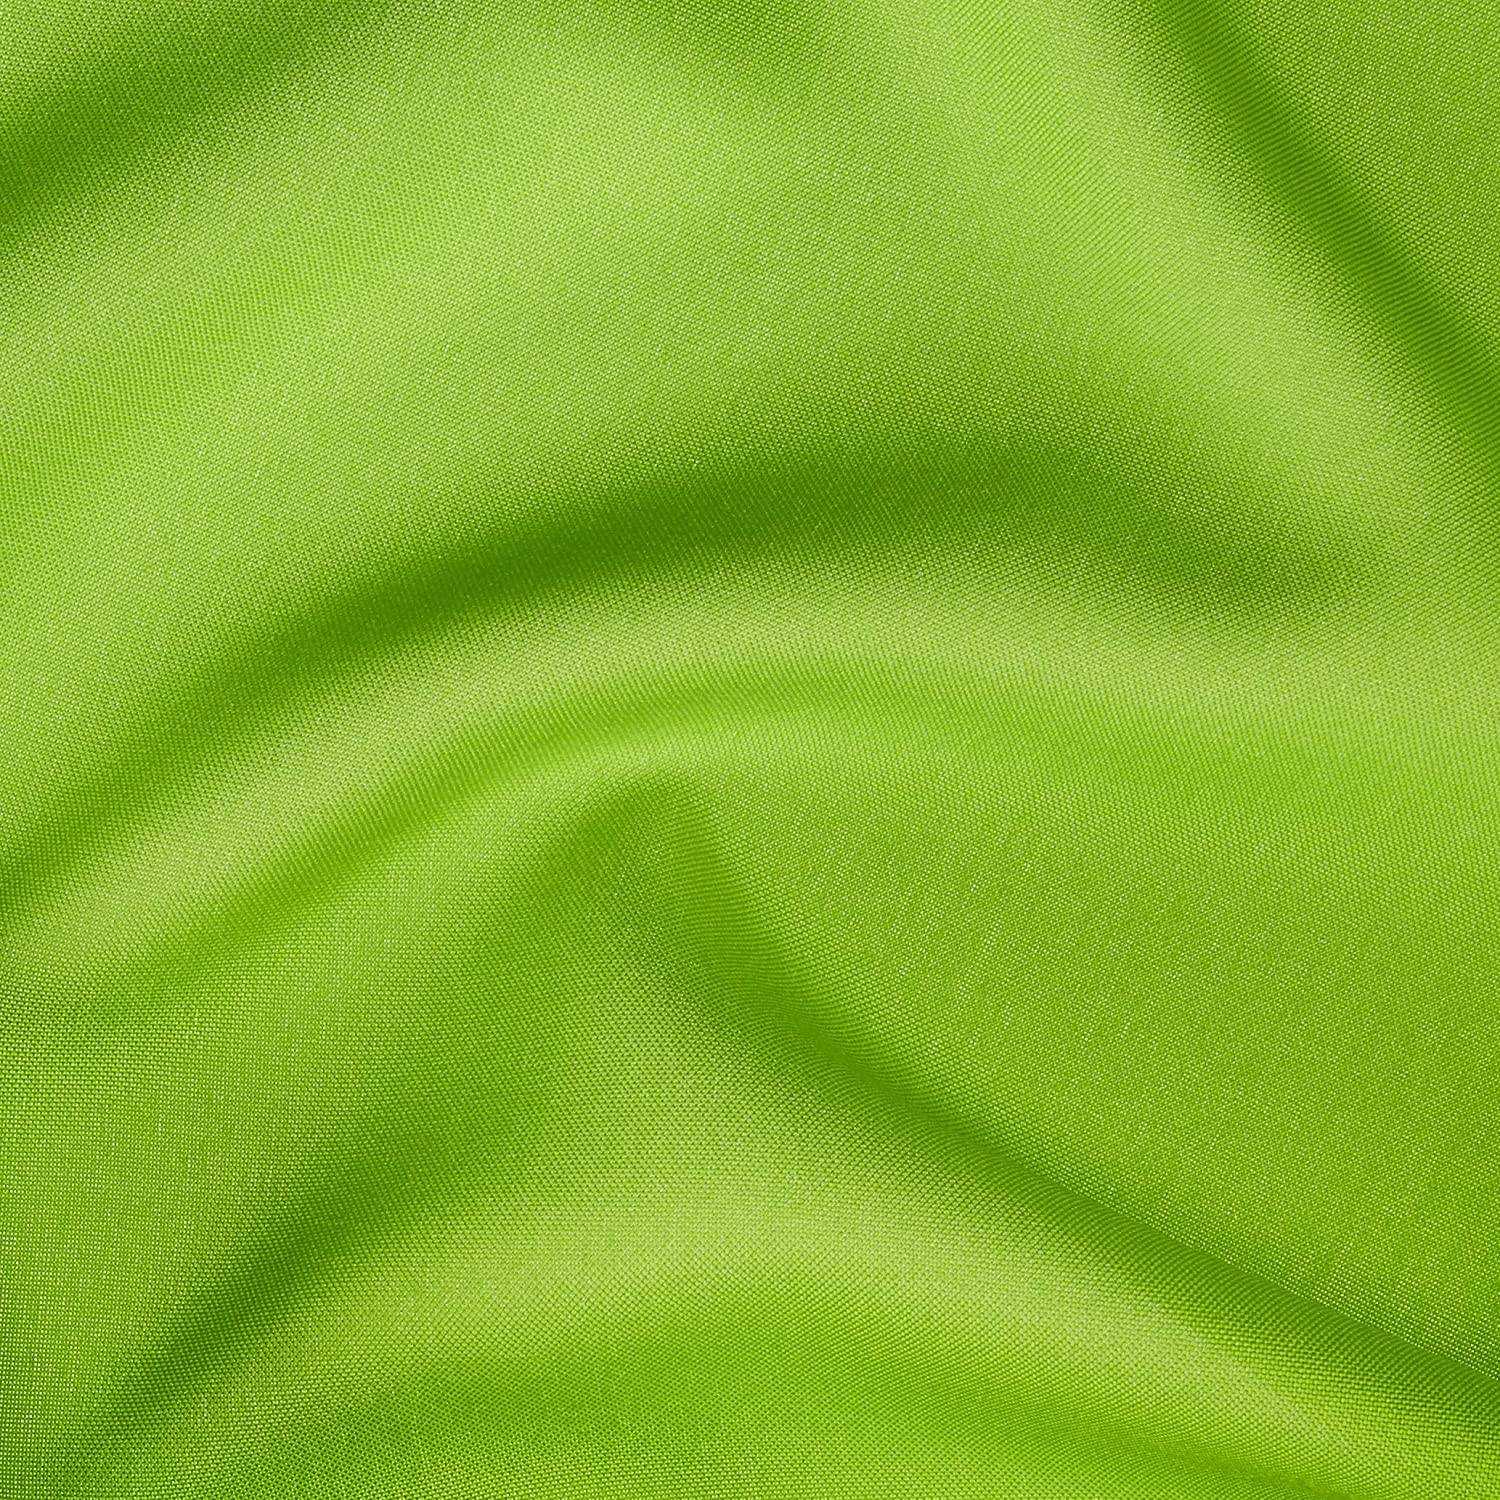 LA Linen Fabric Sample 4x4 in Lime